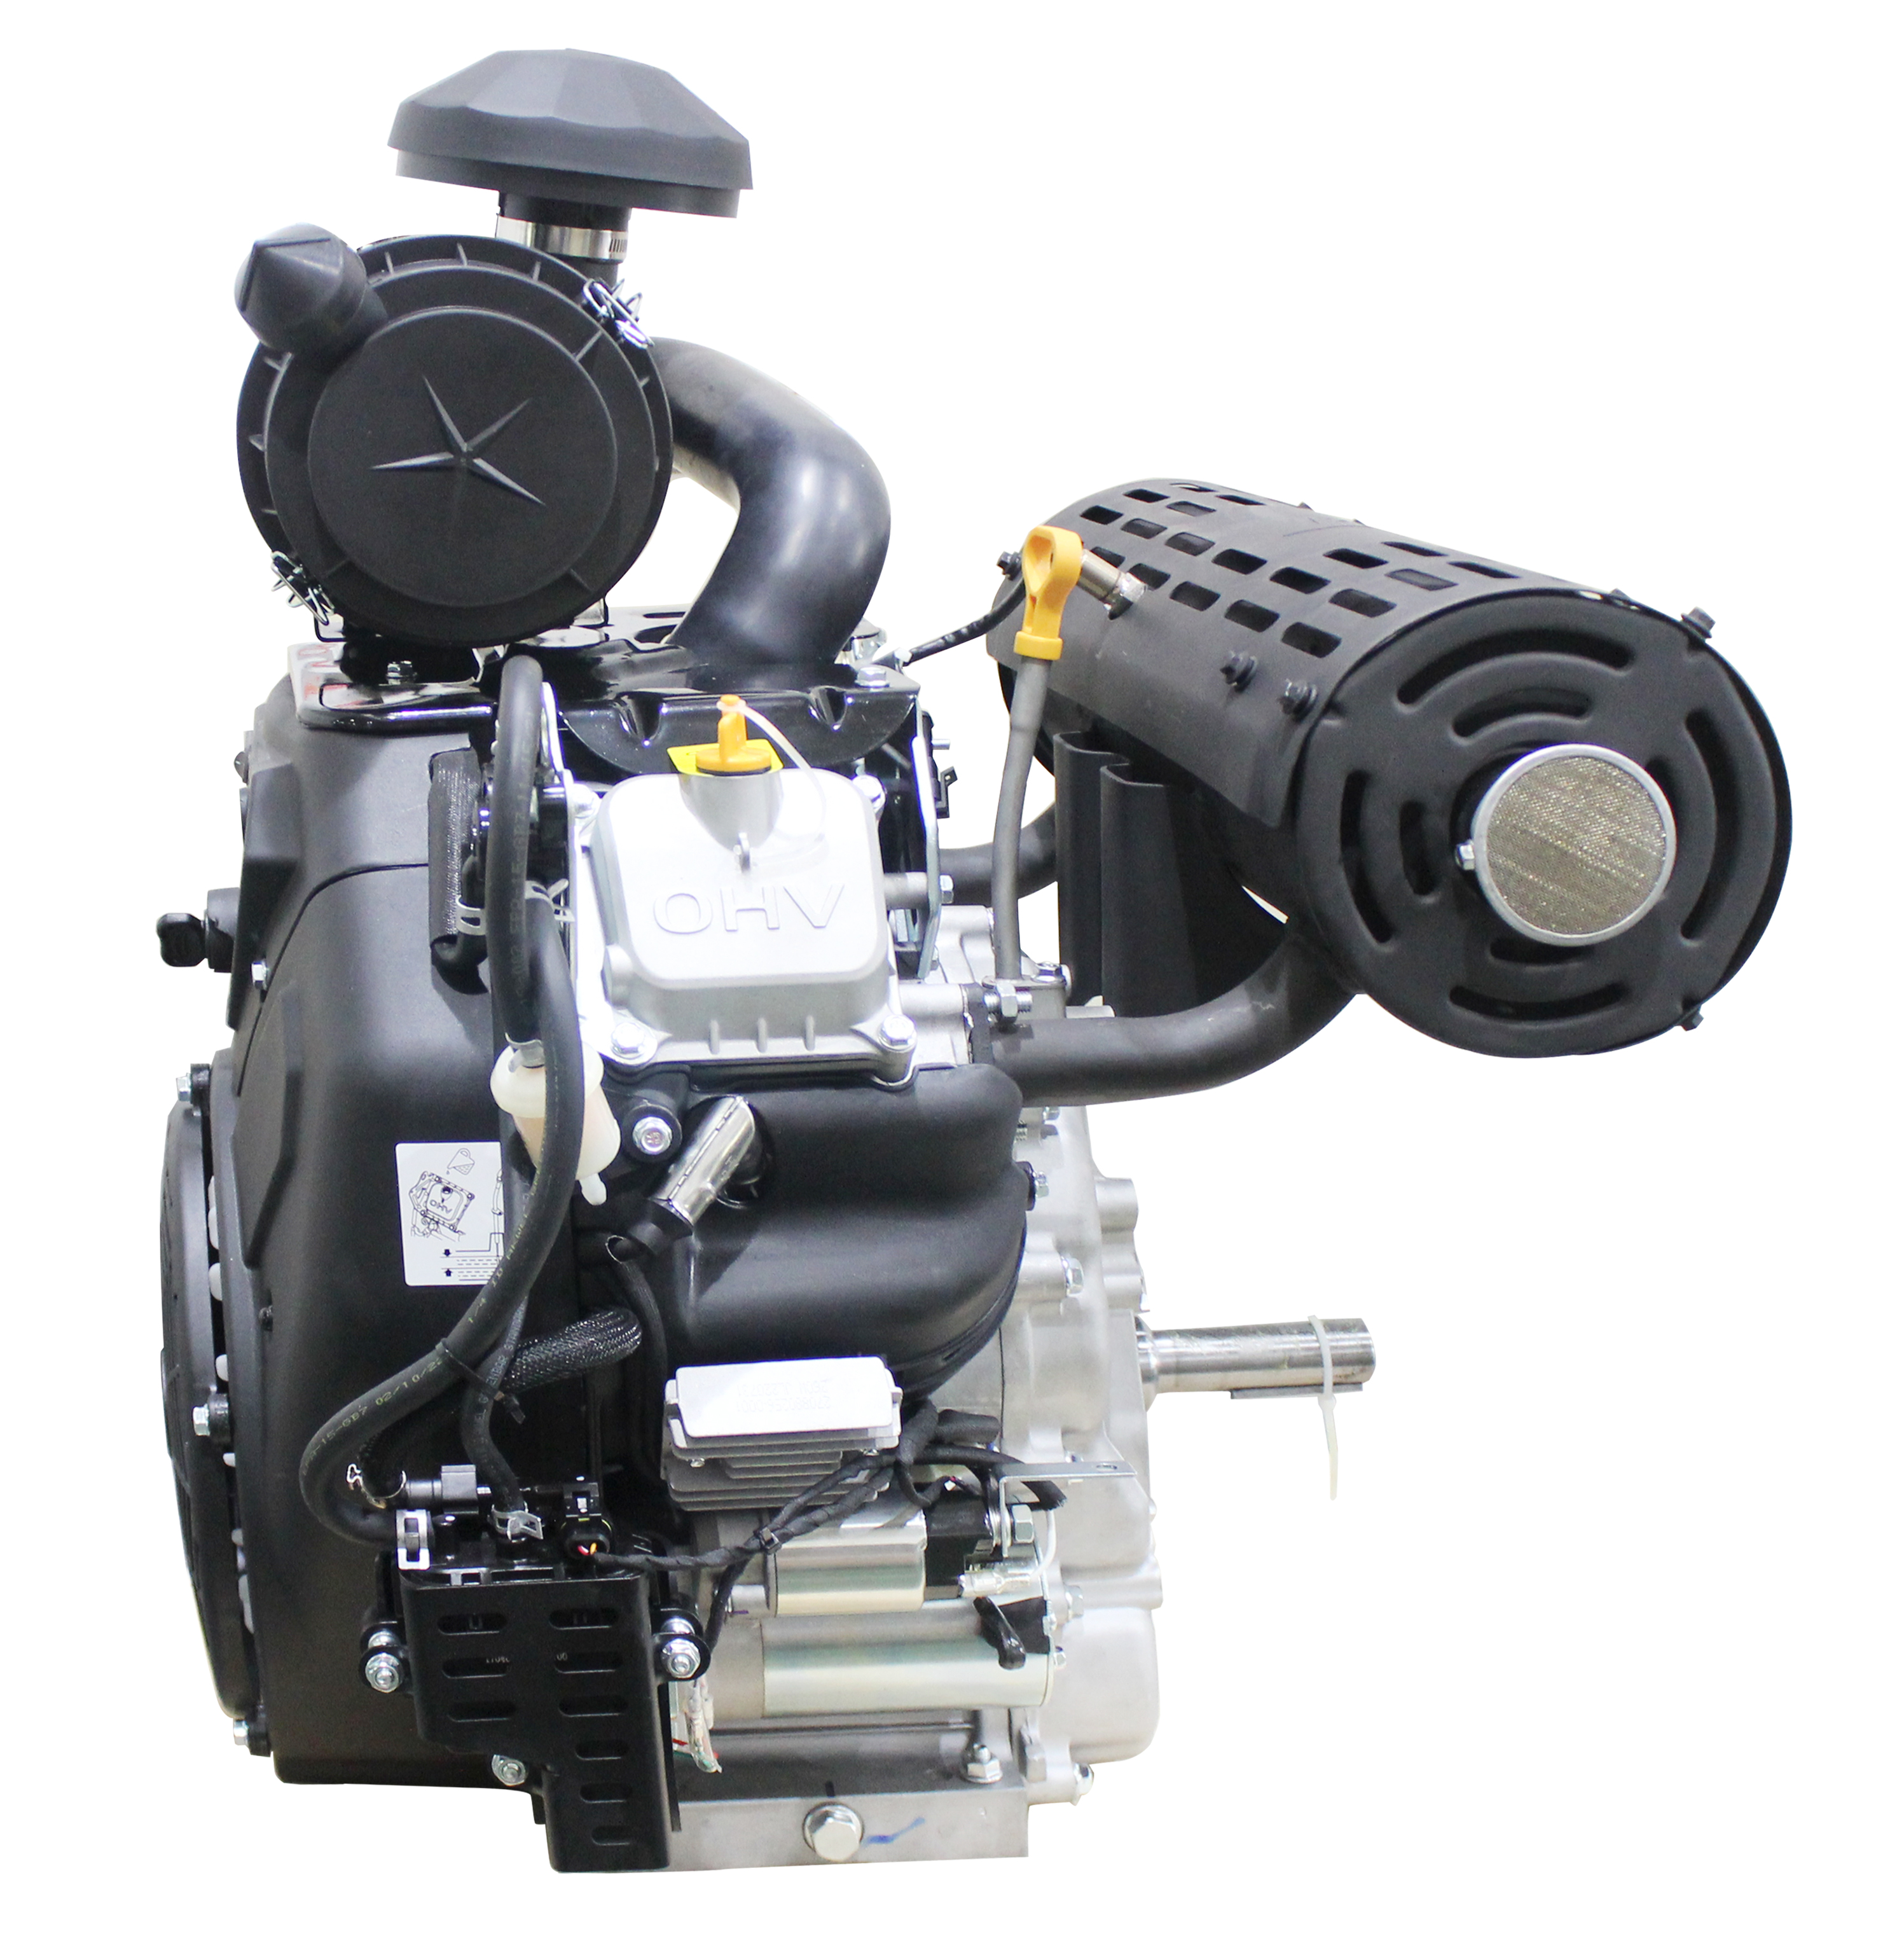 FP1000i 40HP 999CC EFI V Twin Gasoline Engine EPA/EURO-V